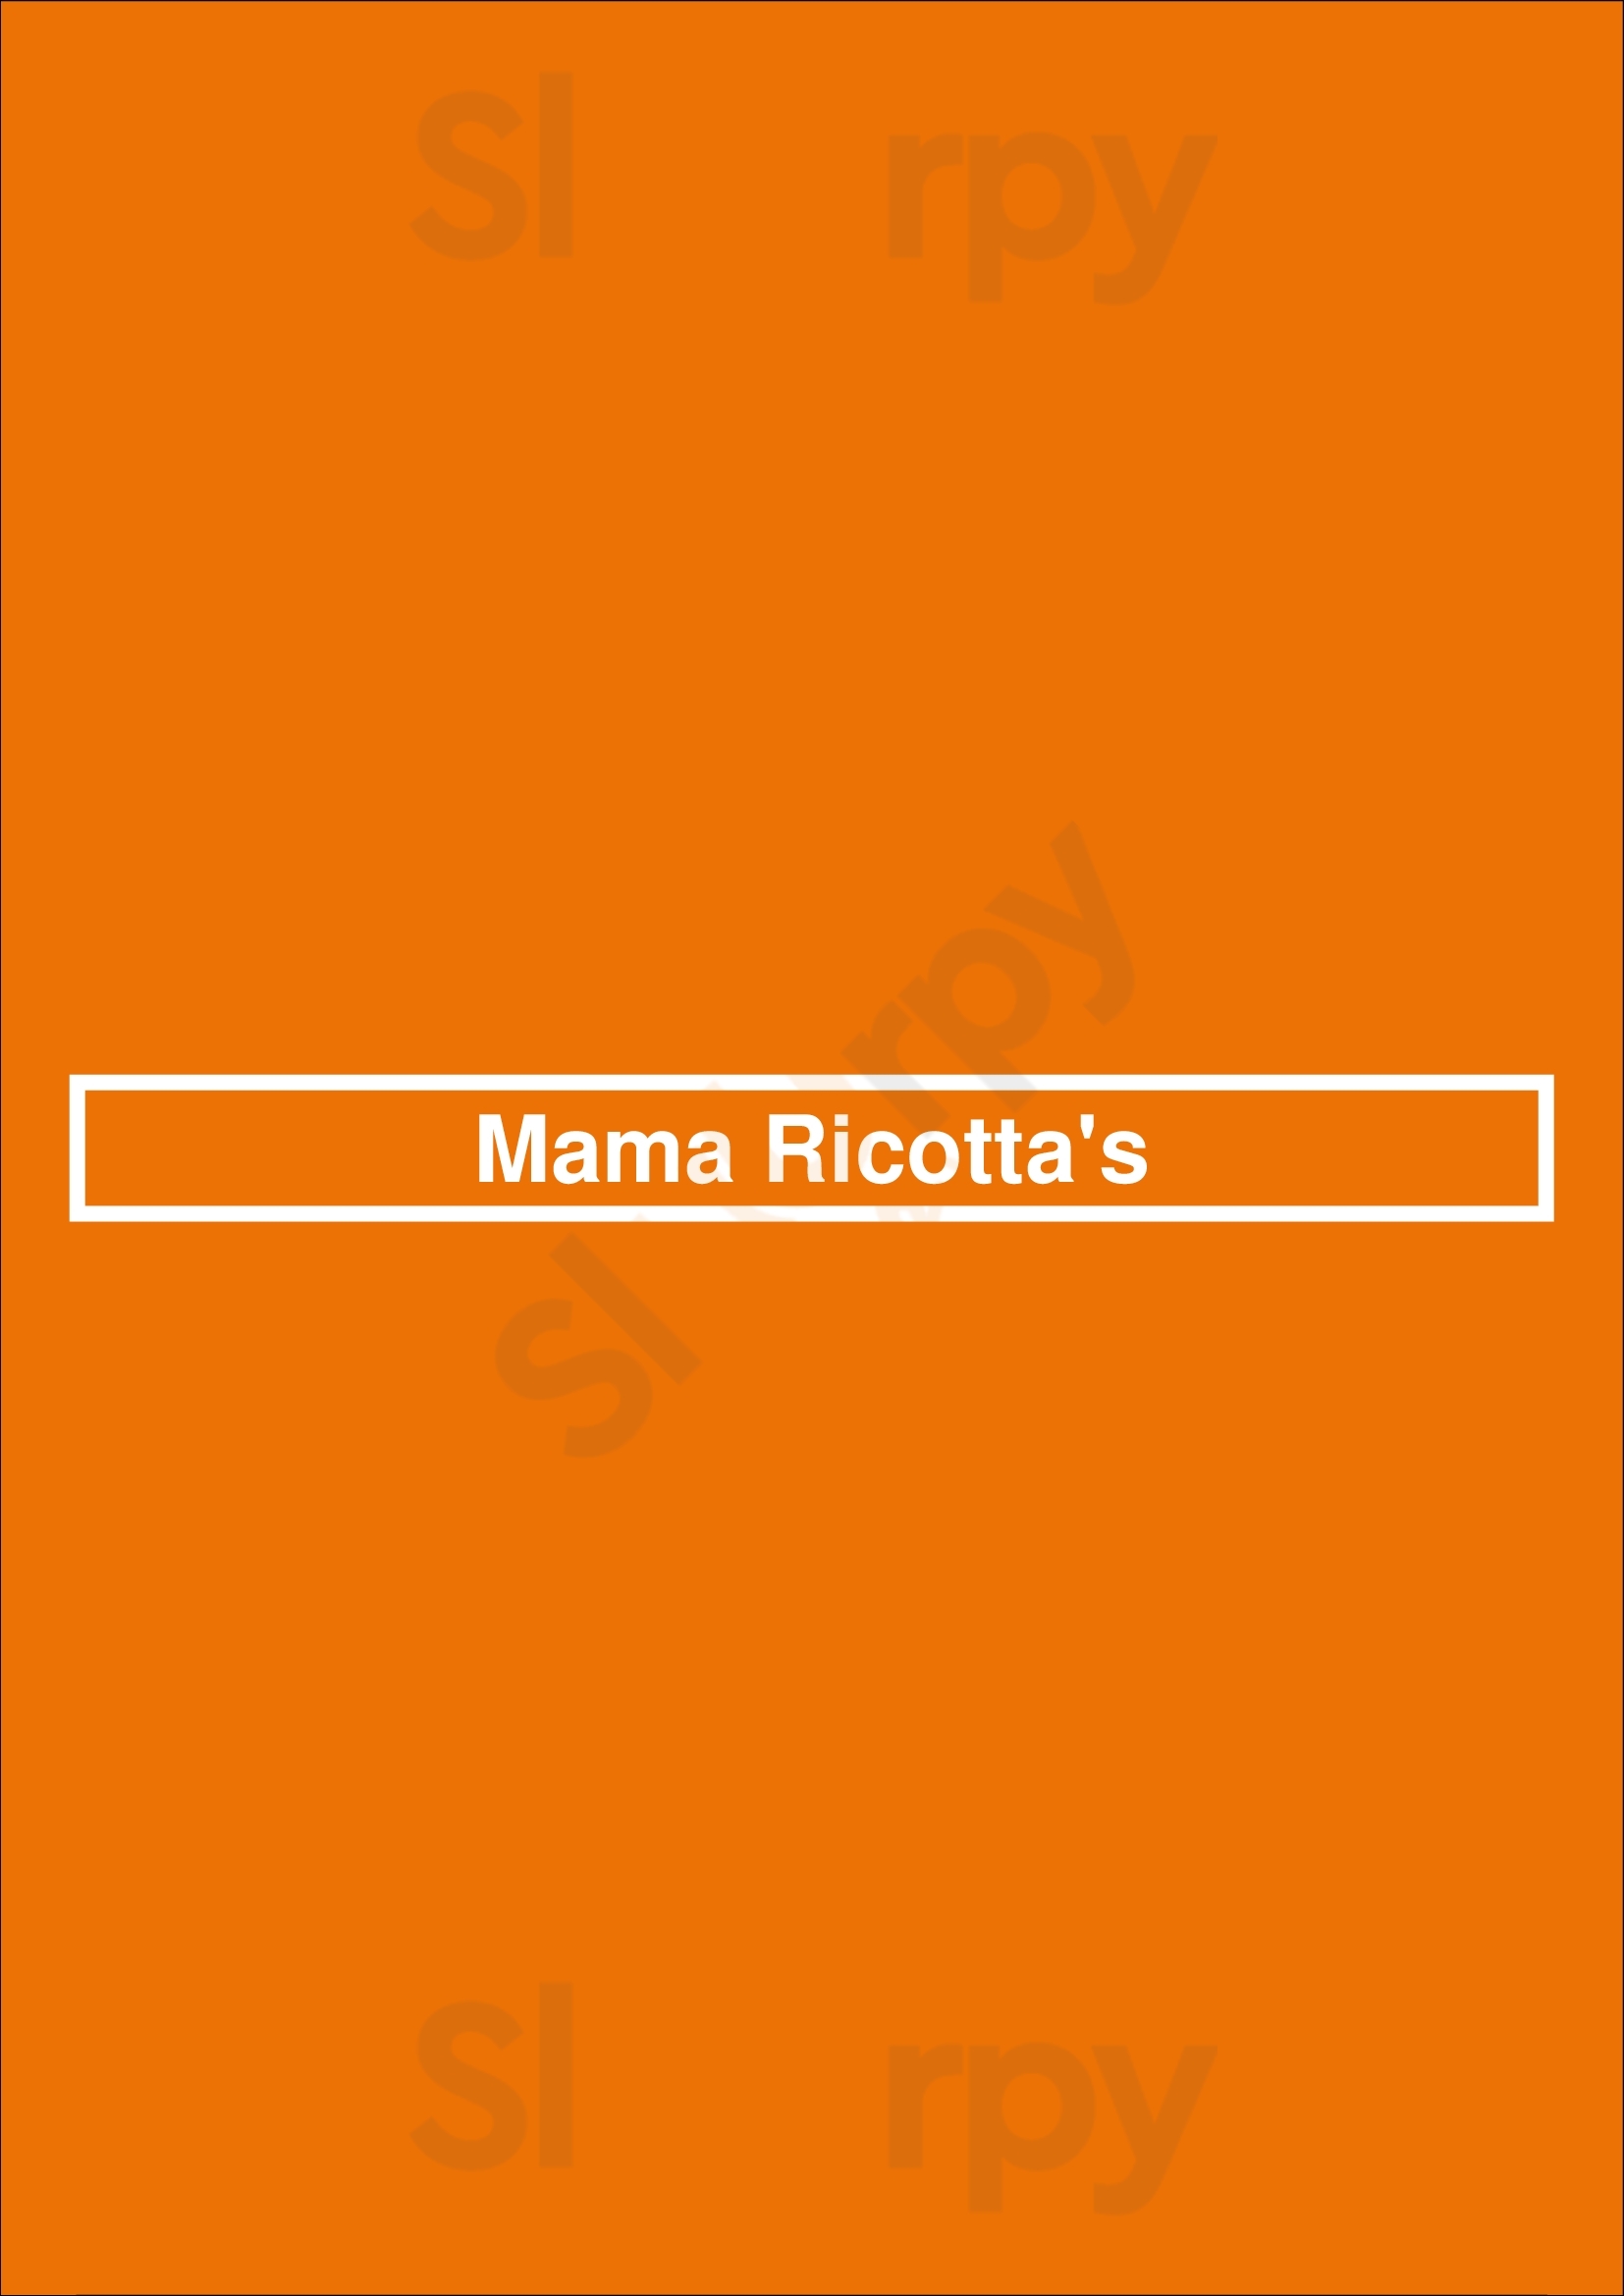 Mama Ricotta's Charlotte Menu - 1